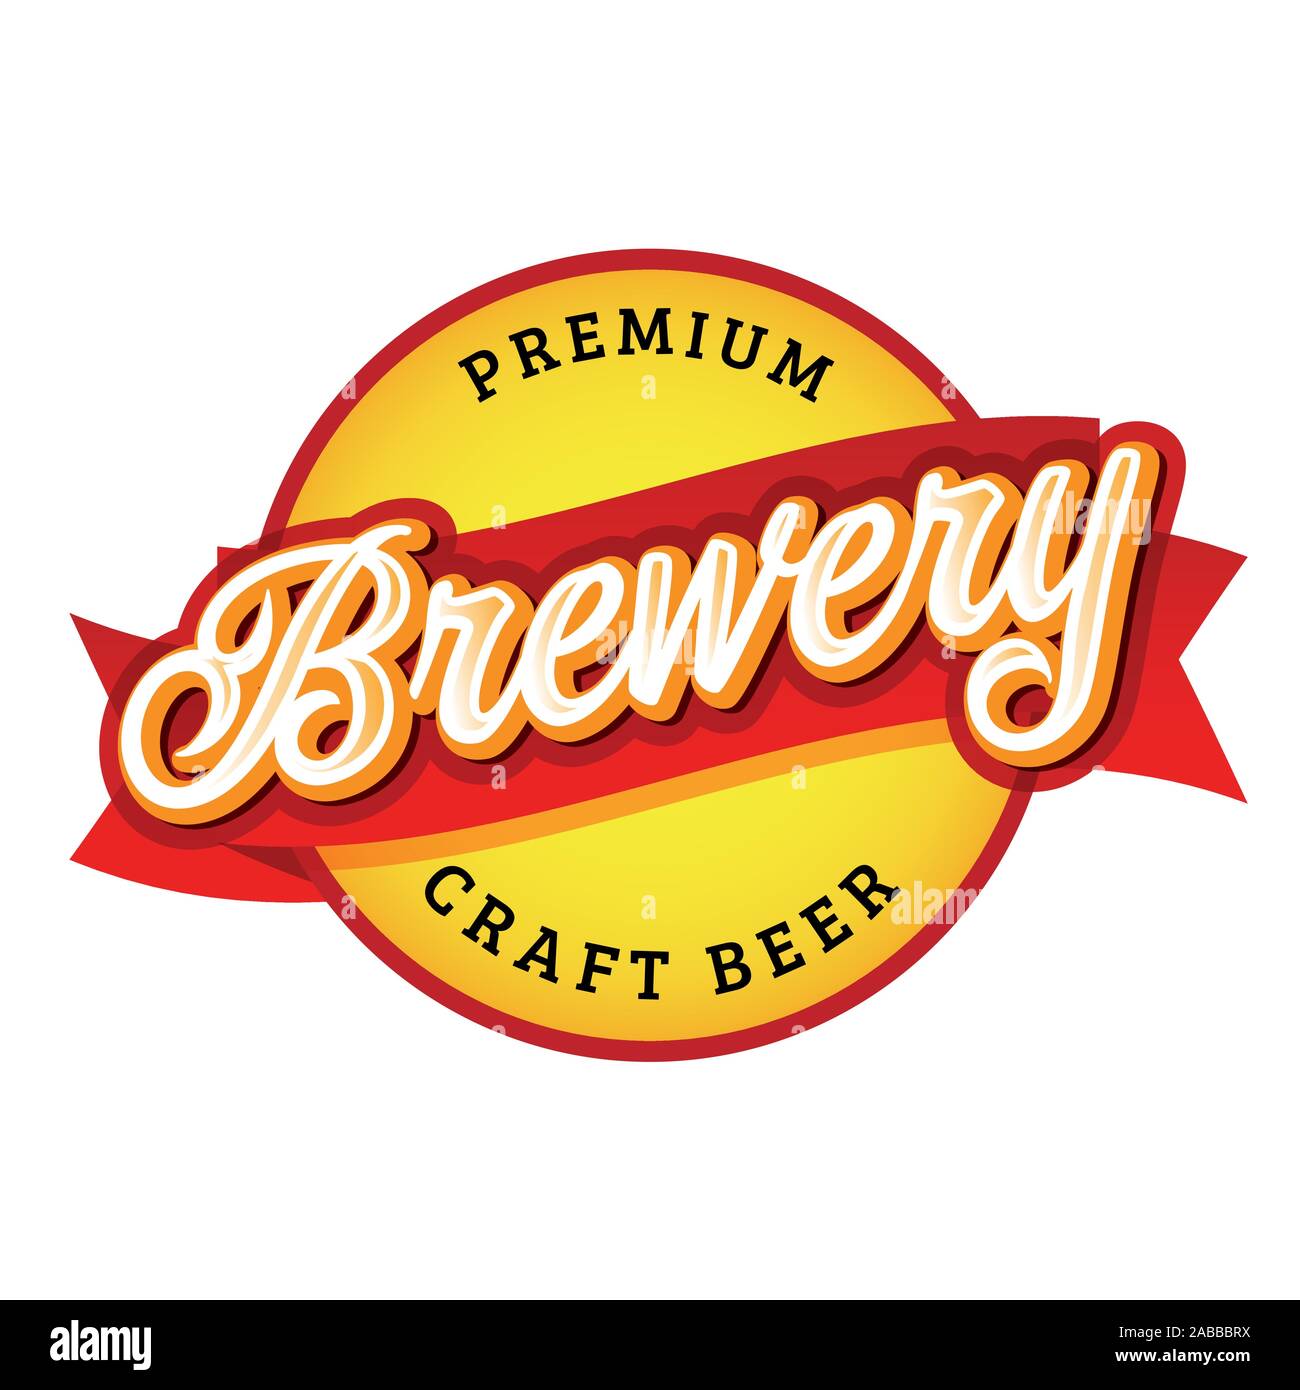 Premium Brewery sign vintage label Stock Vector